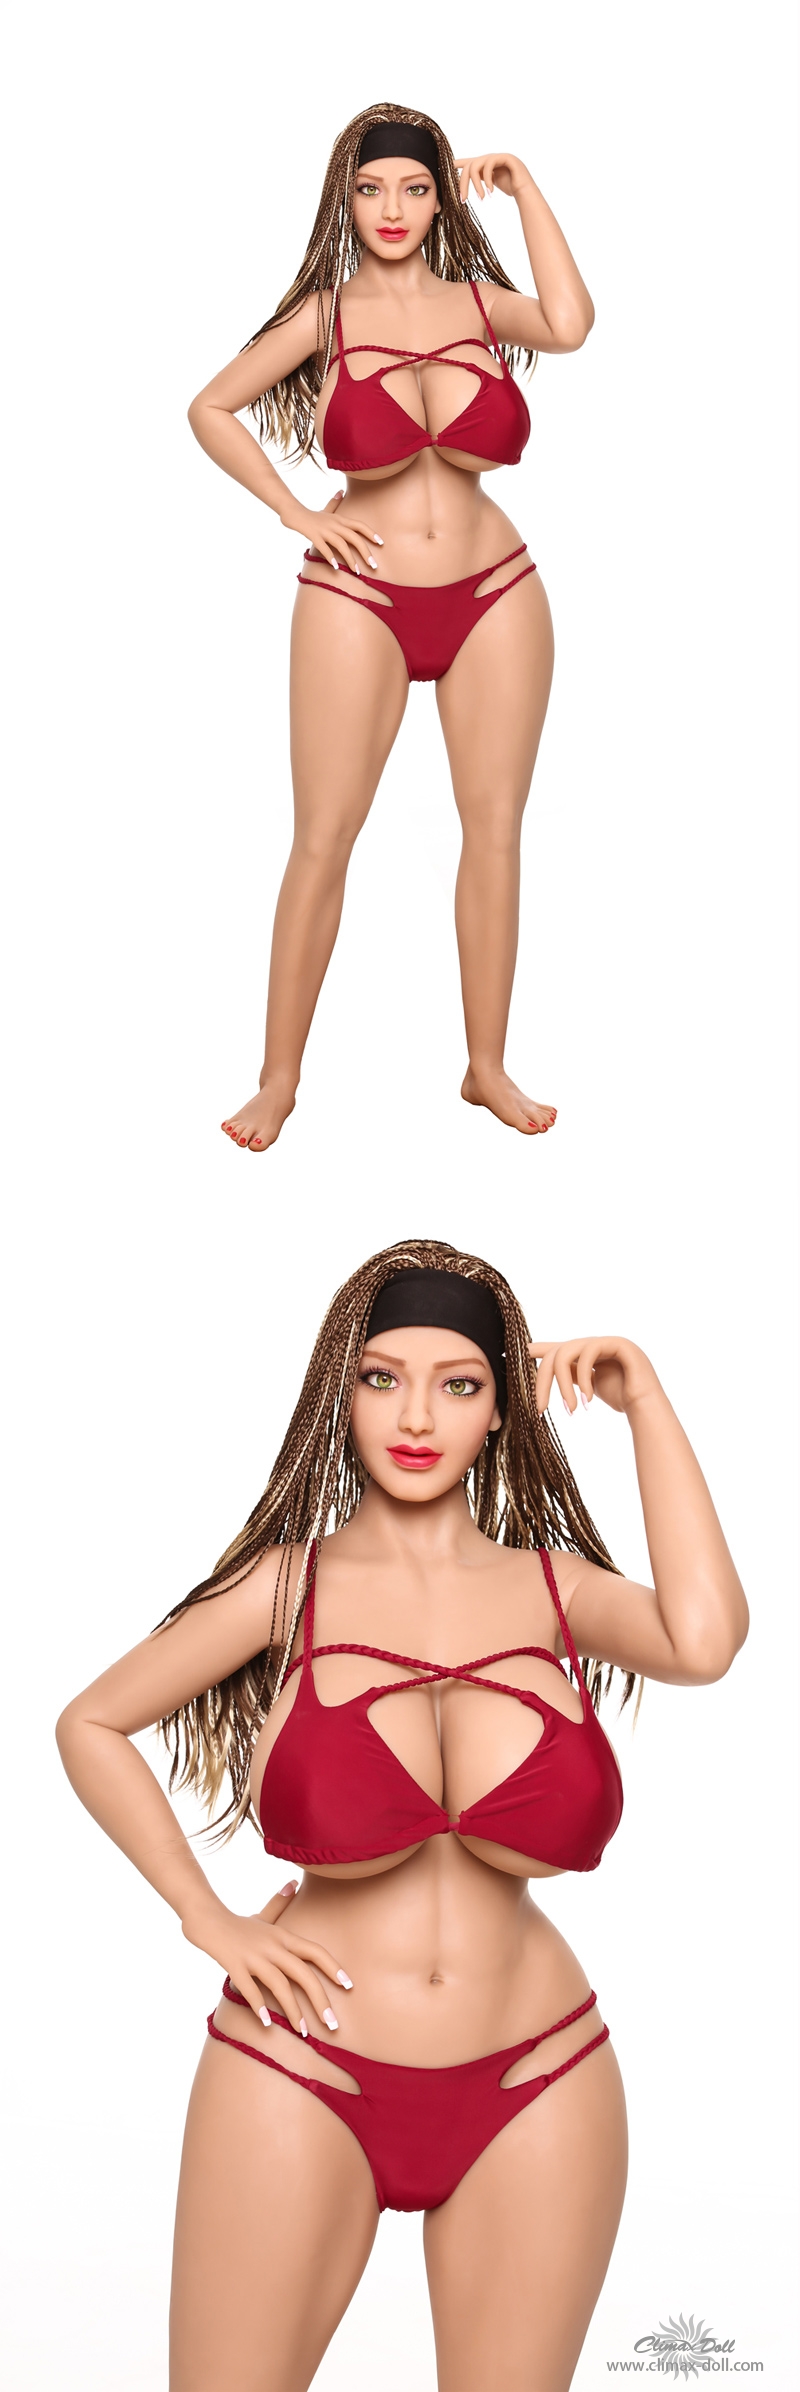 Josie-155cm-face 22-Suntan skin big tits tpe doll climax doll